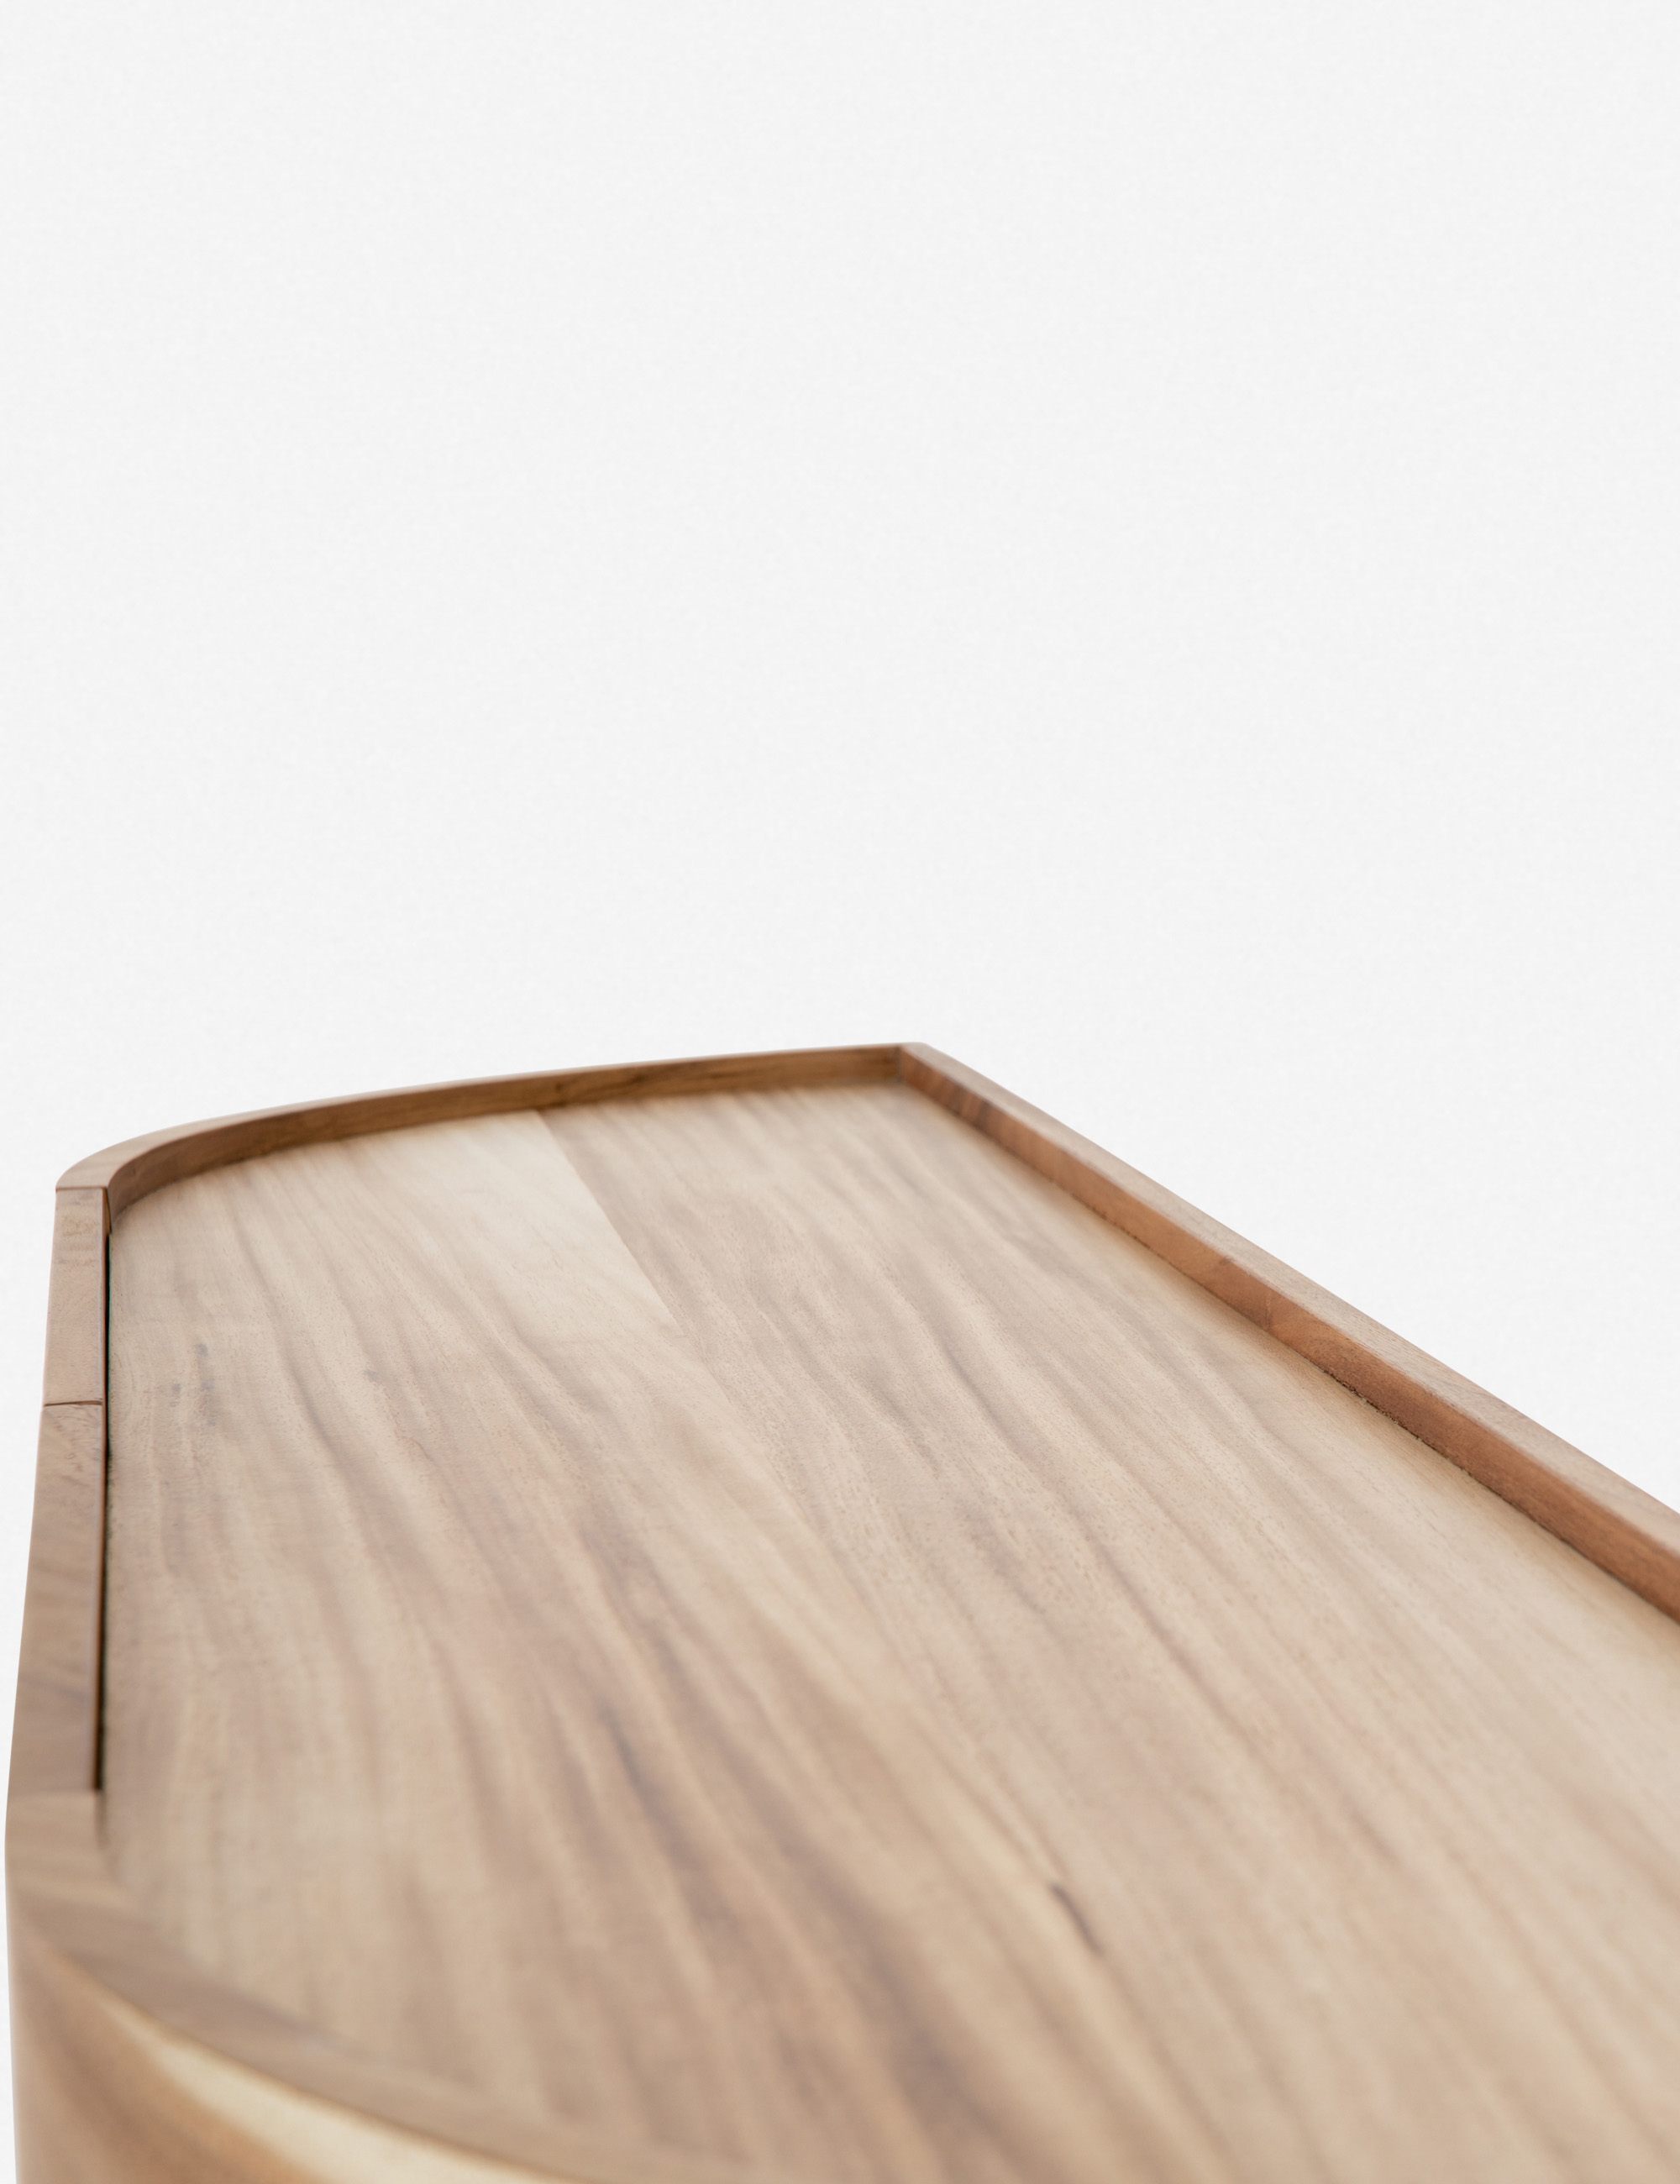 Nausica Sideboard - Image 5